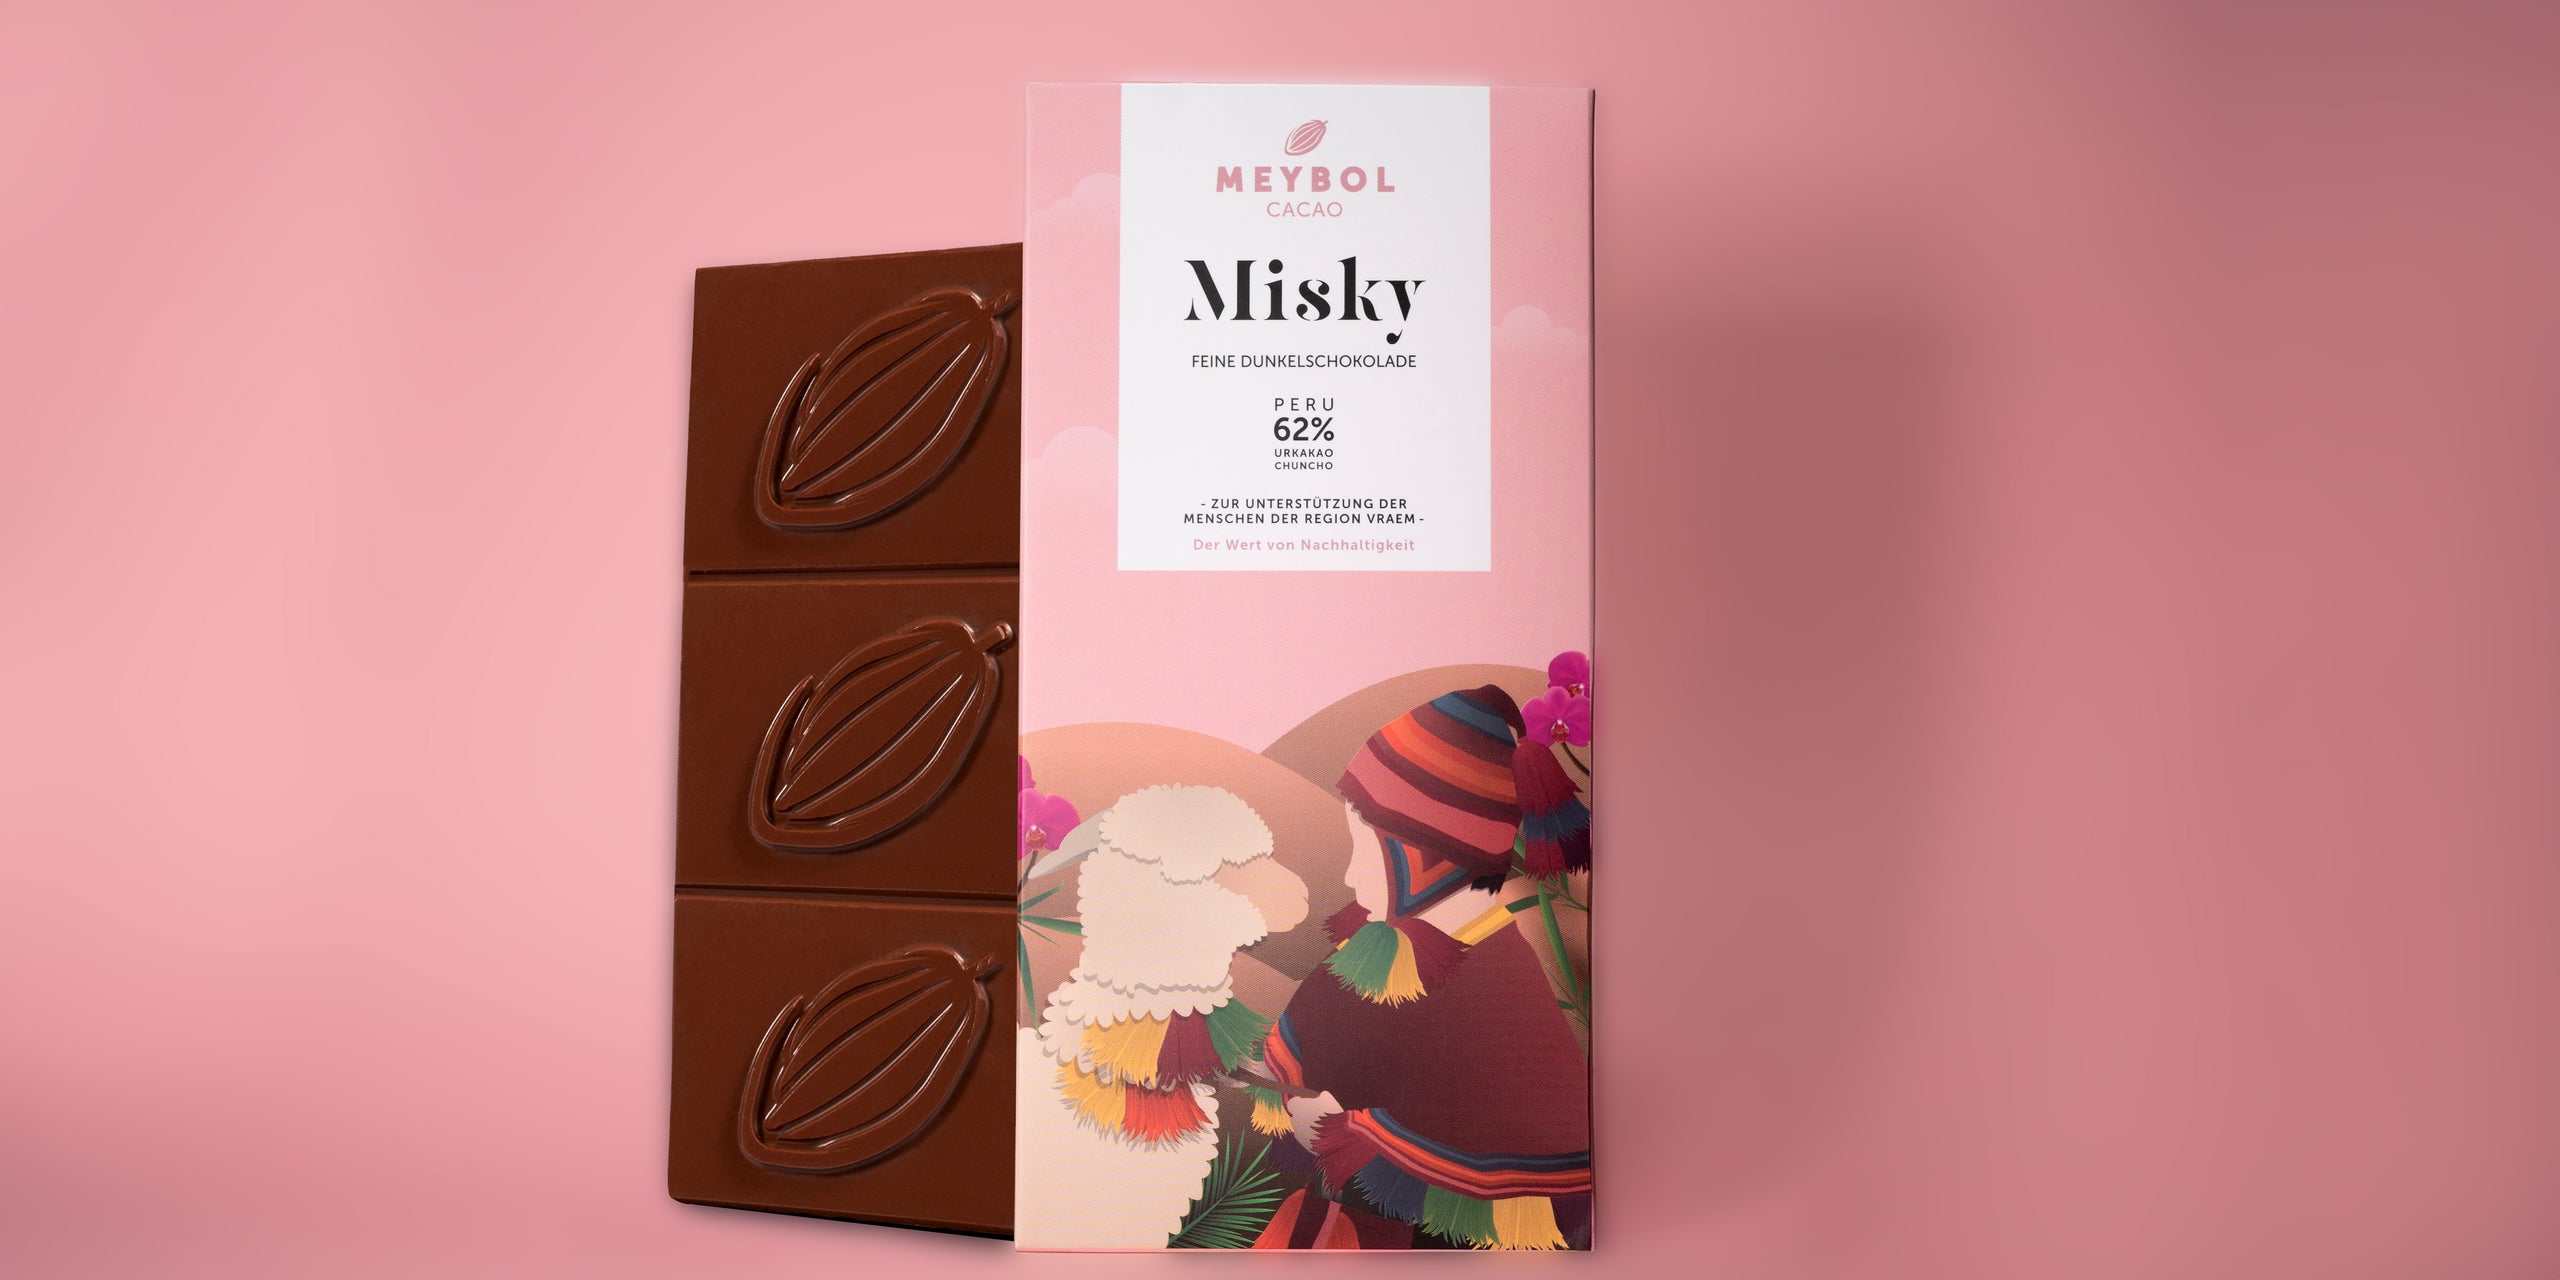 Meybol Cacao - Misky 62% | Best Chocolate